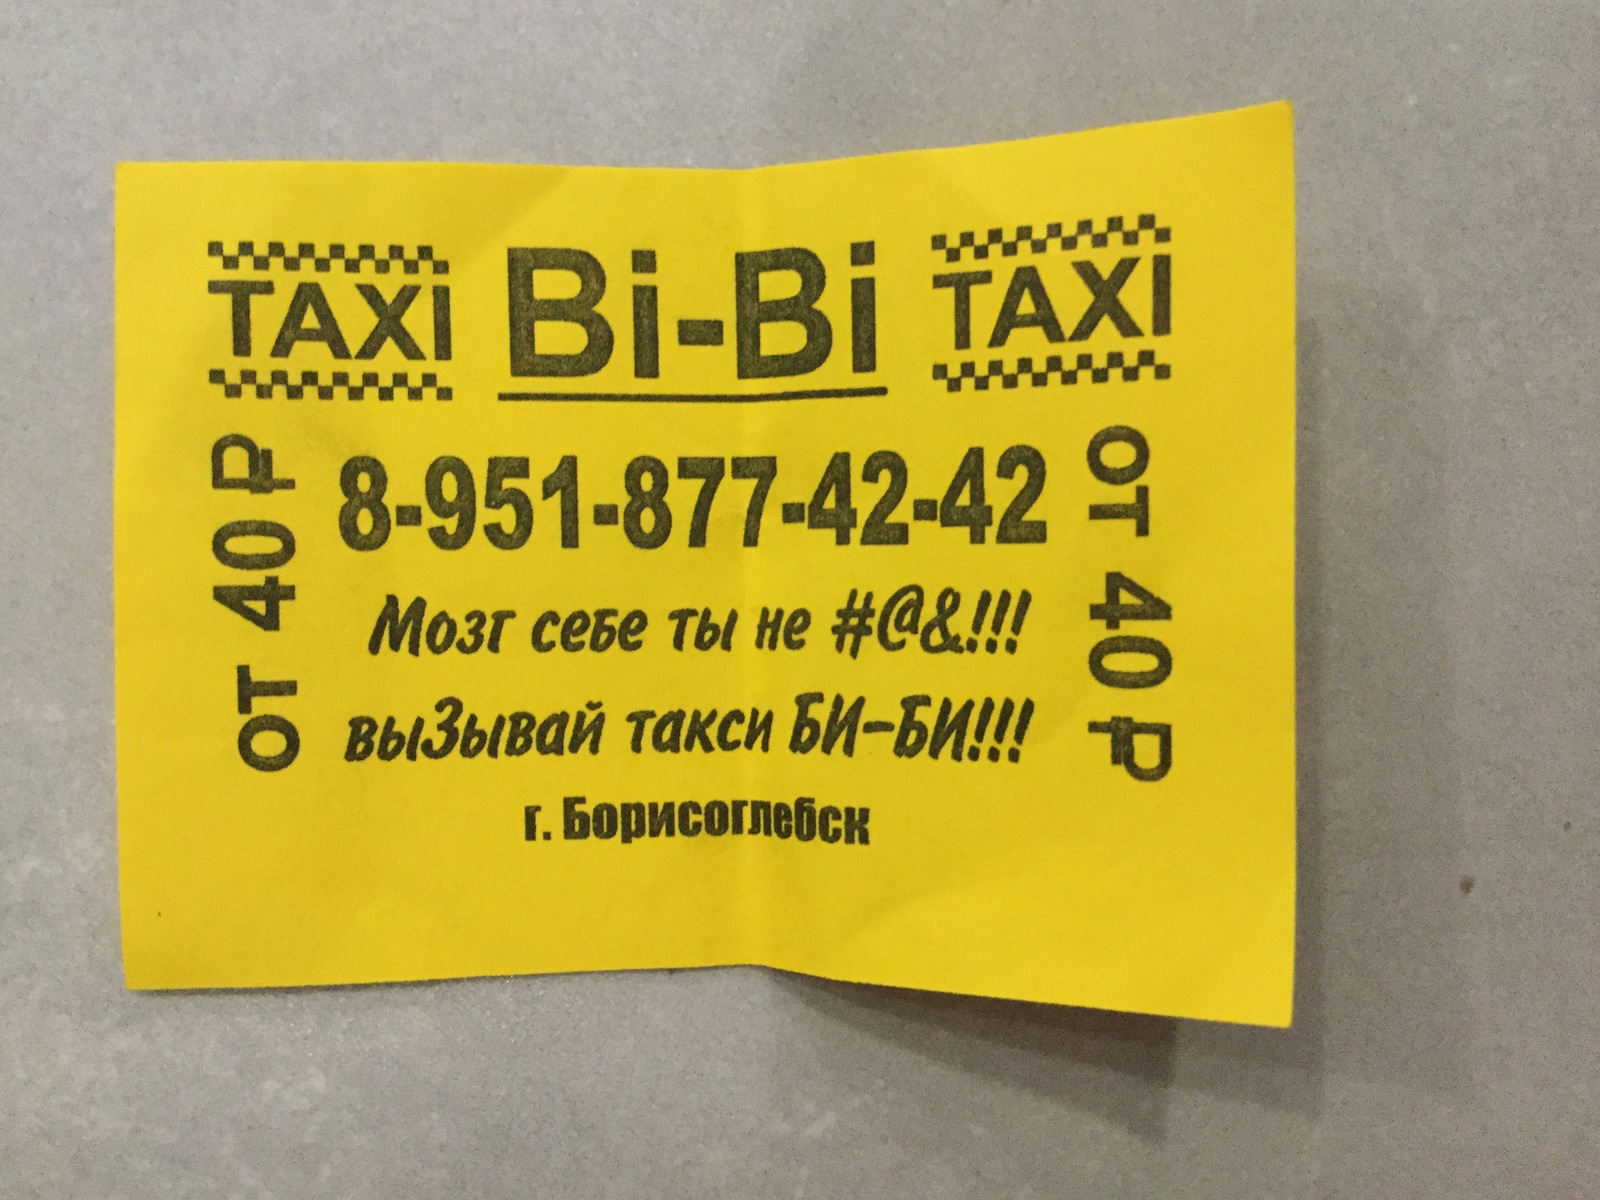 Але такси борисоглебск. Такси Борисоглебск. Борисоглебское такси. Такси Борисоглебск номера. Маркетолог такси.